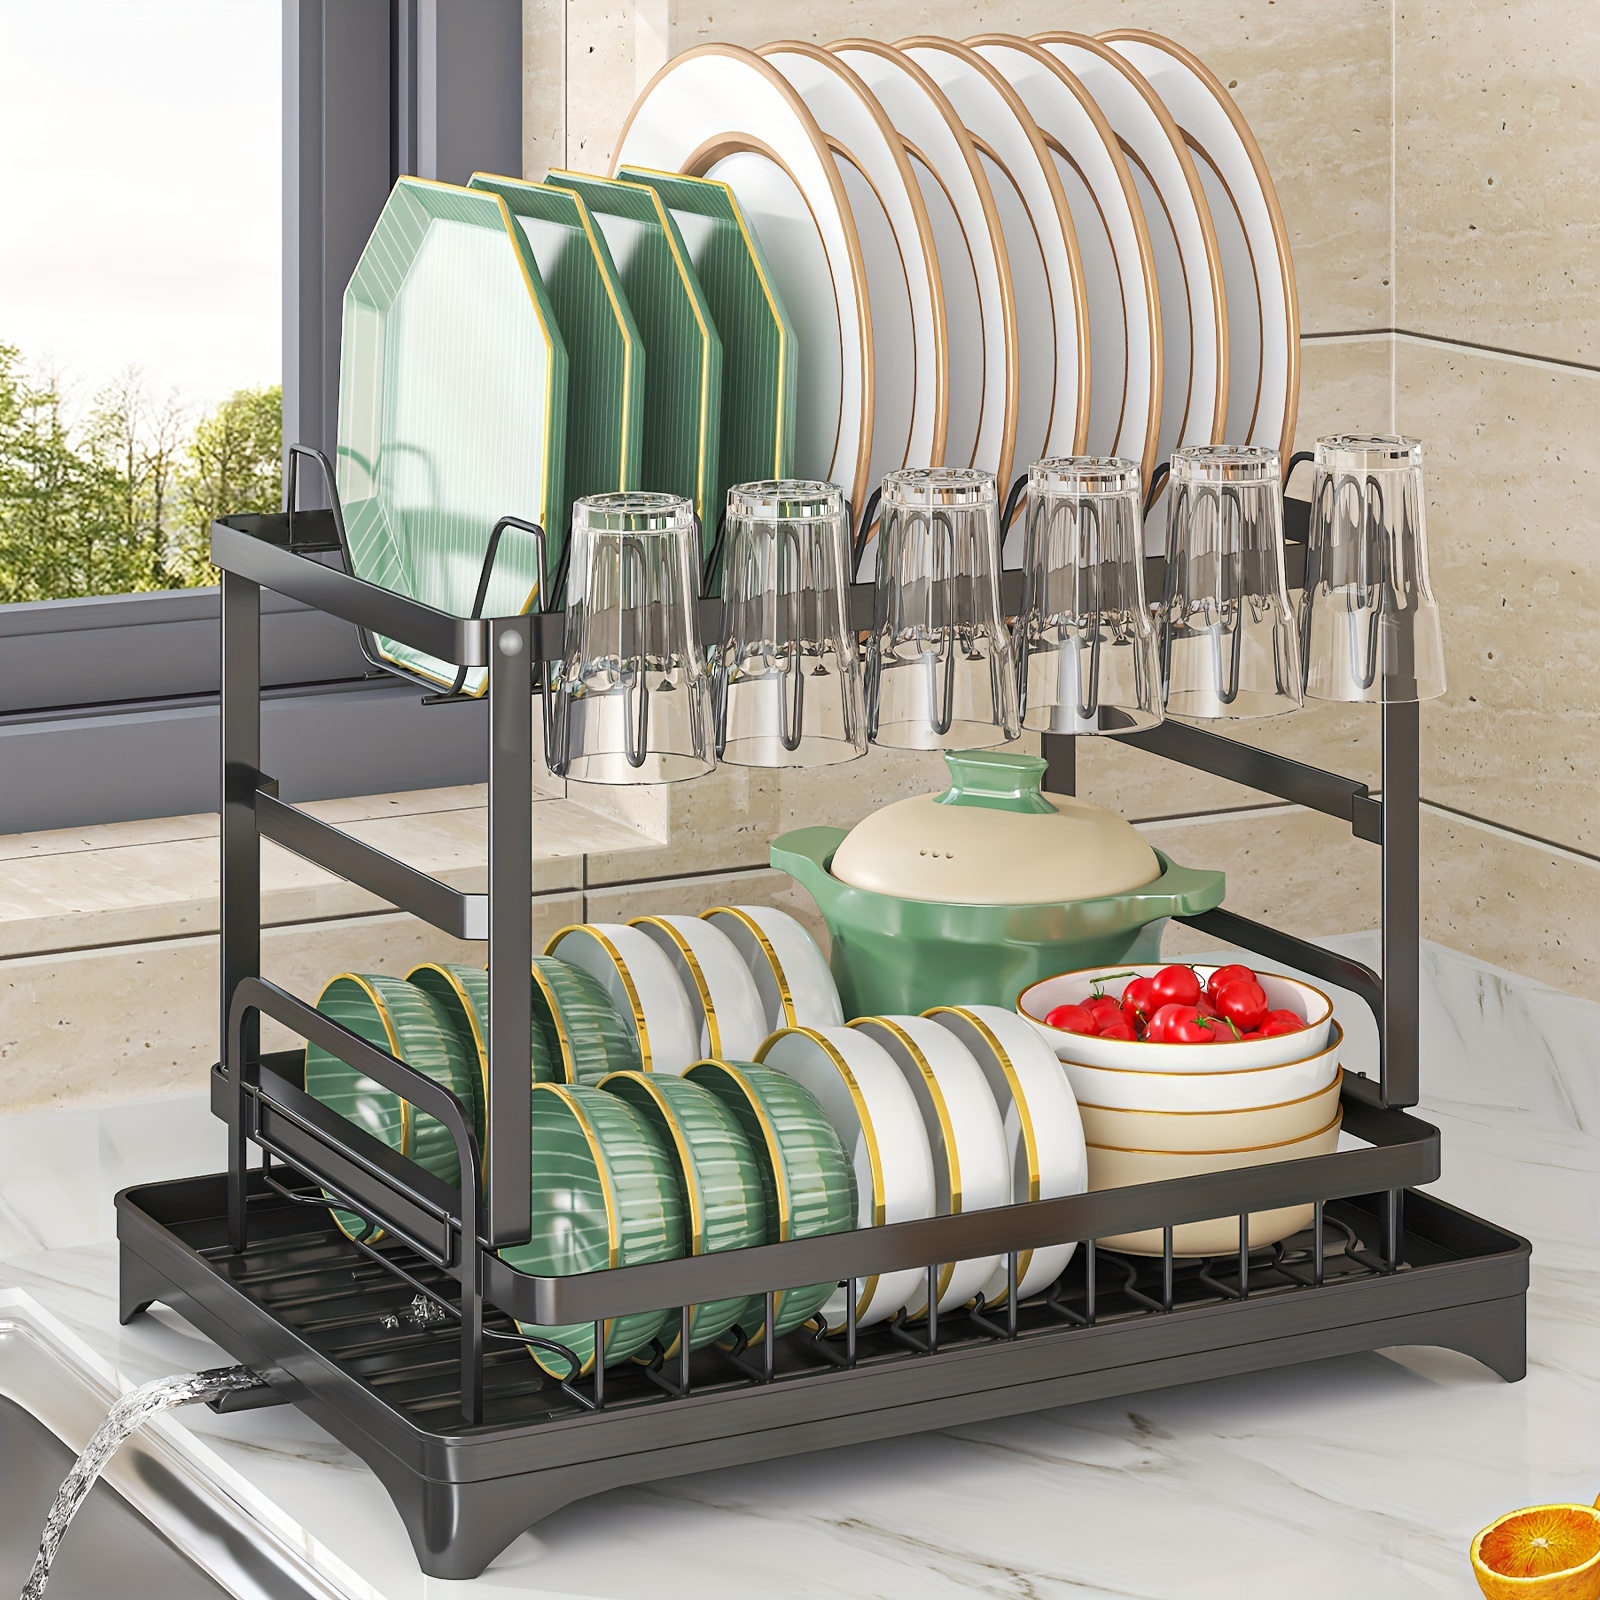 Household Dish Drying Rack Kitchen Utensil Drainer Rack With Drain